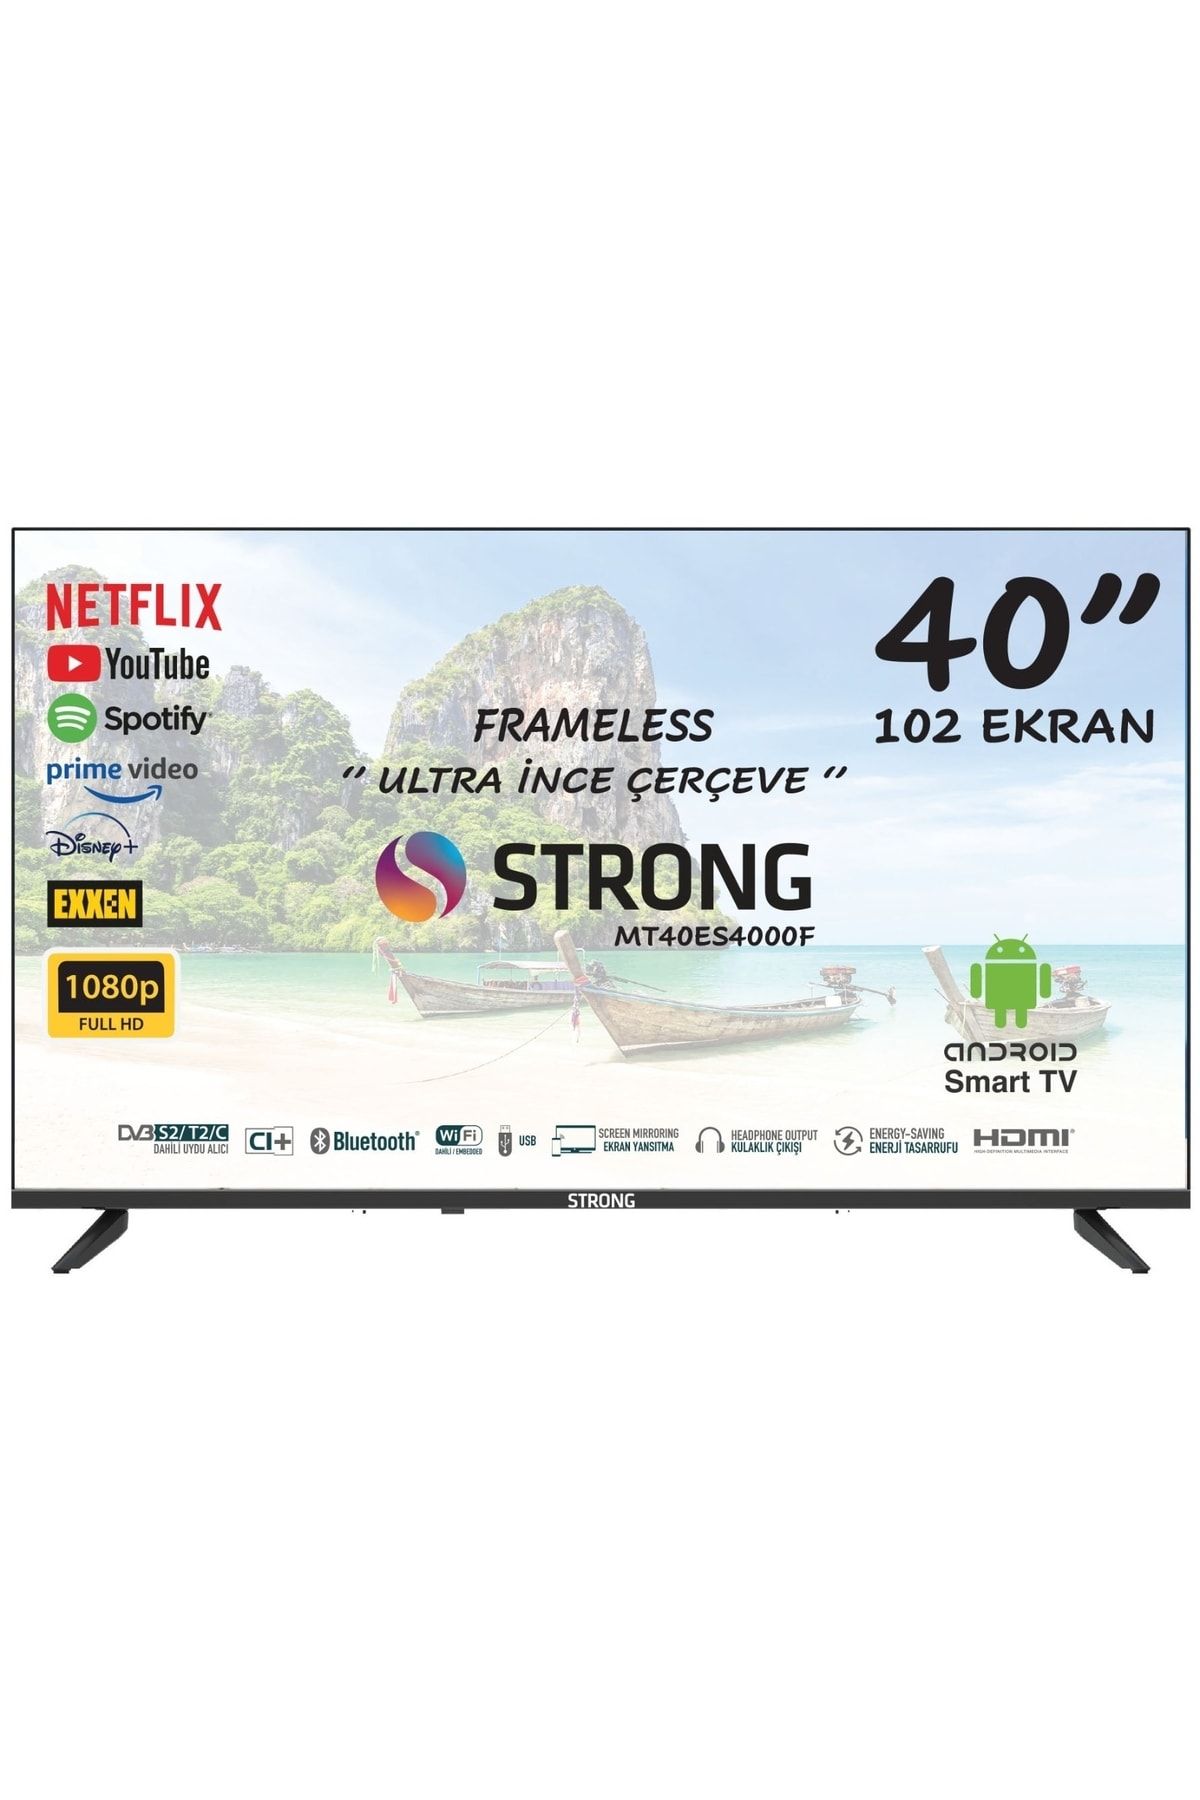 Strong MT40ES4000F 40" 101 Ekran Uydu Alıcılı Full HD Android Smart LED TV